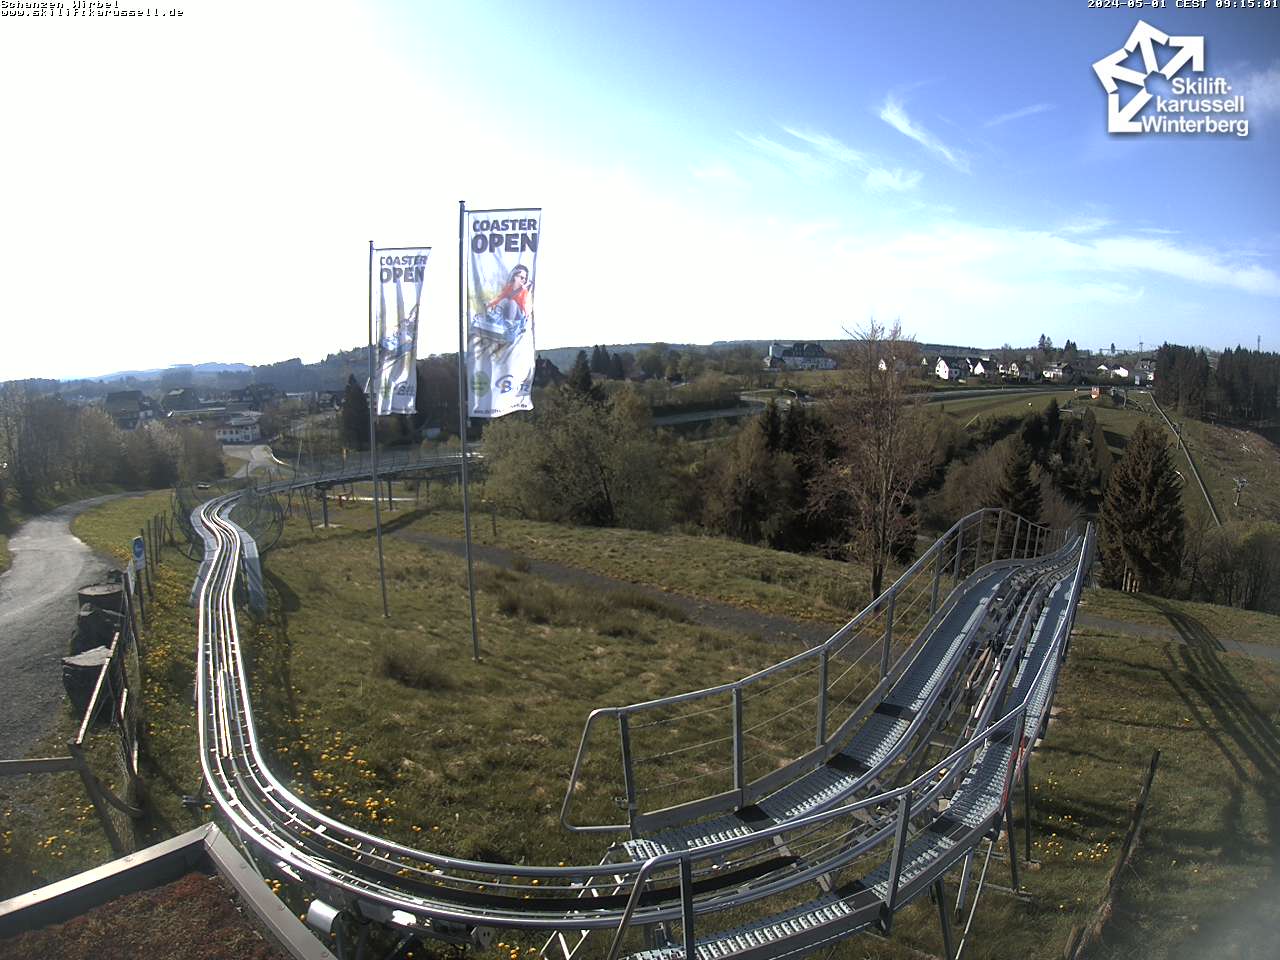 Webcam Schanzen Wirbel - Skiliftkarussell Winterberg